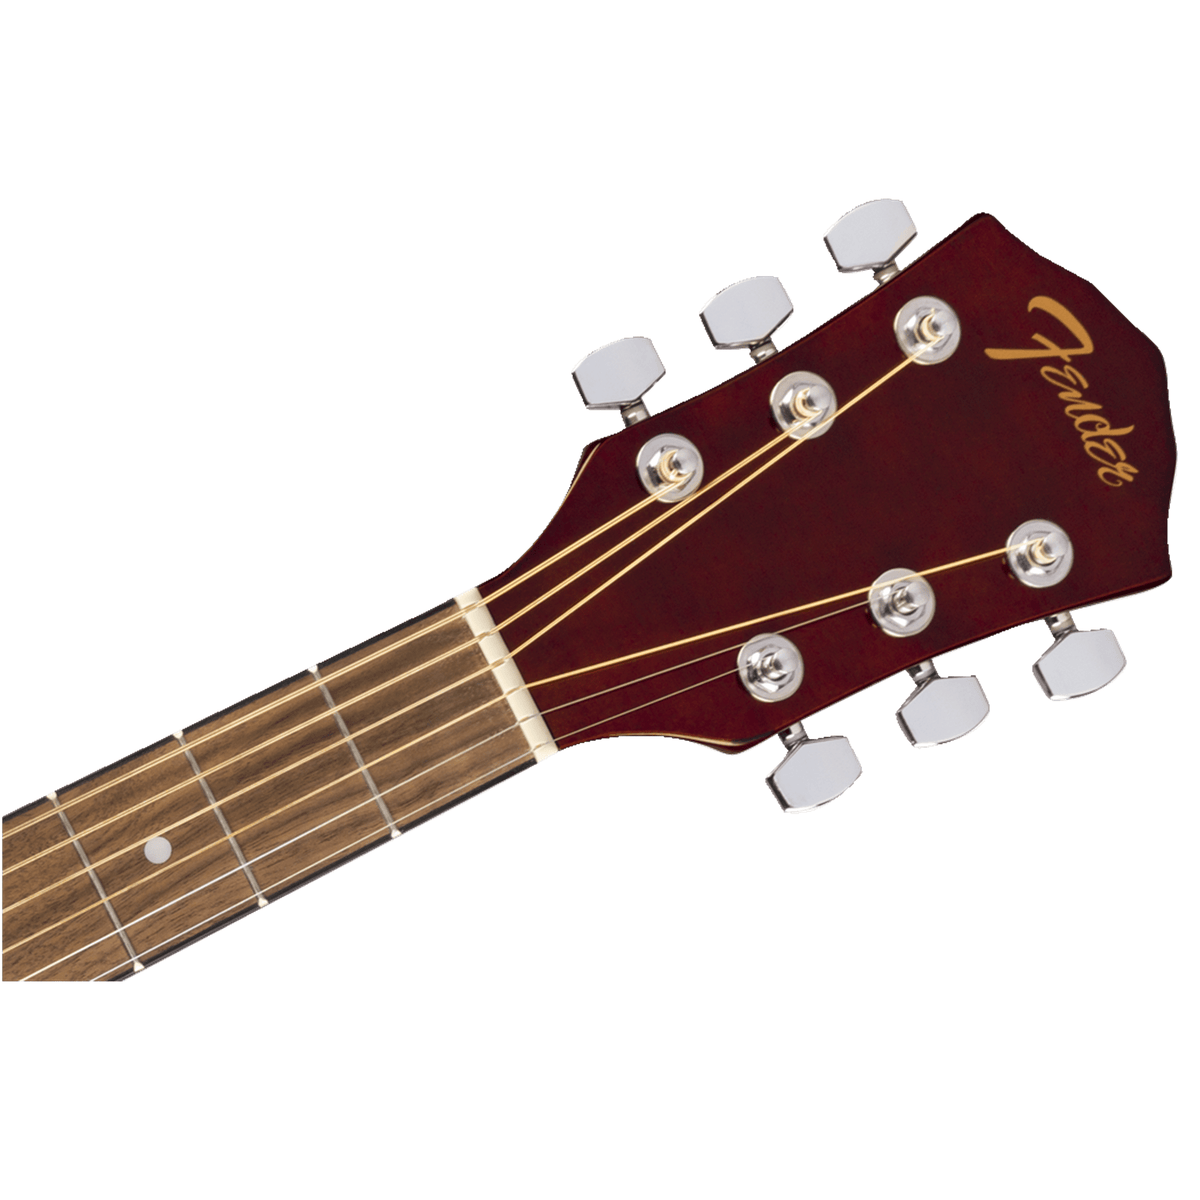 Fender Guitar Fender FA-125 Acoustic Guitar Dreadnought Natural with Bag - Byron Music